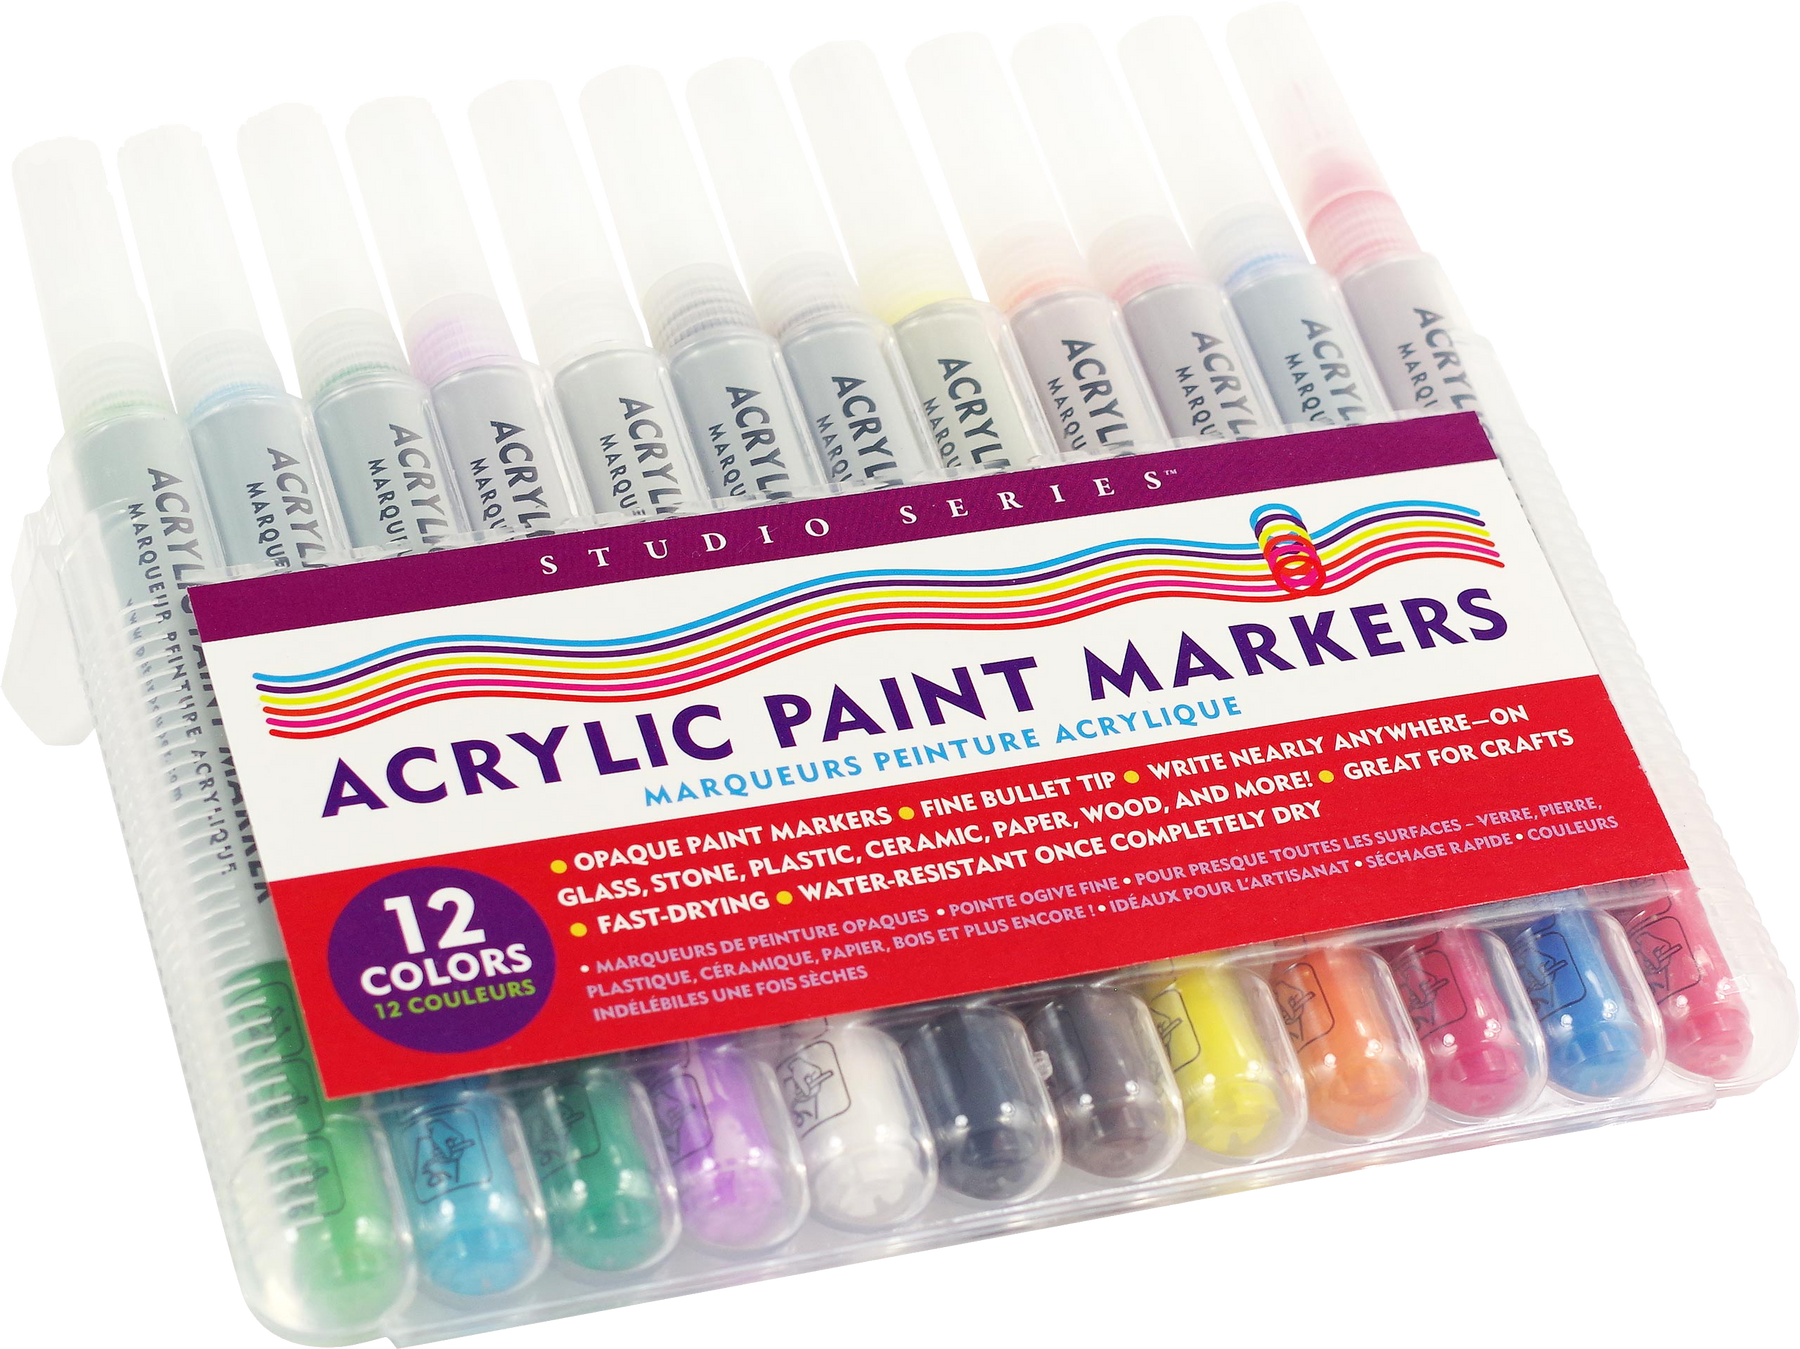 Studio Series Acrylic Paint Markers (Set of 12) – Peter Pauper Press